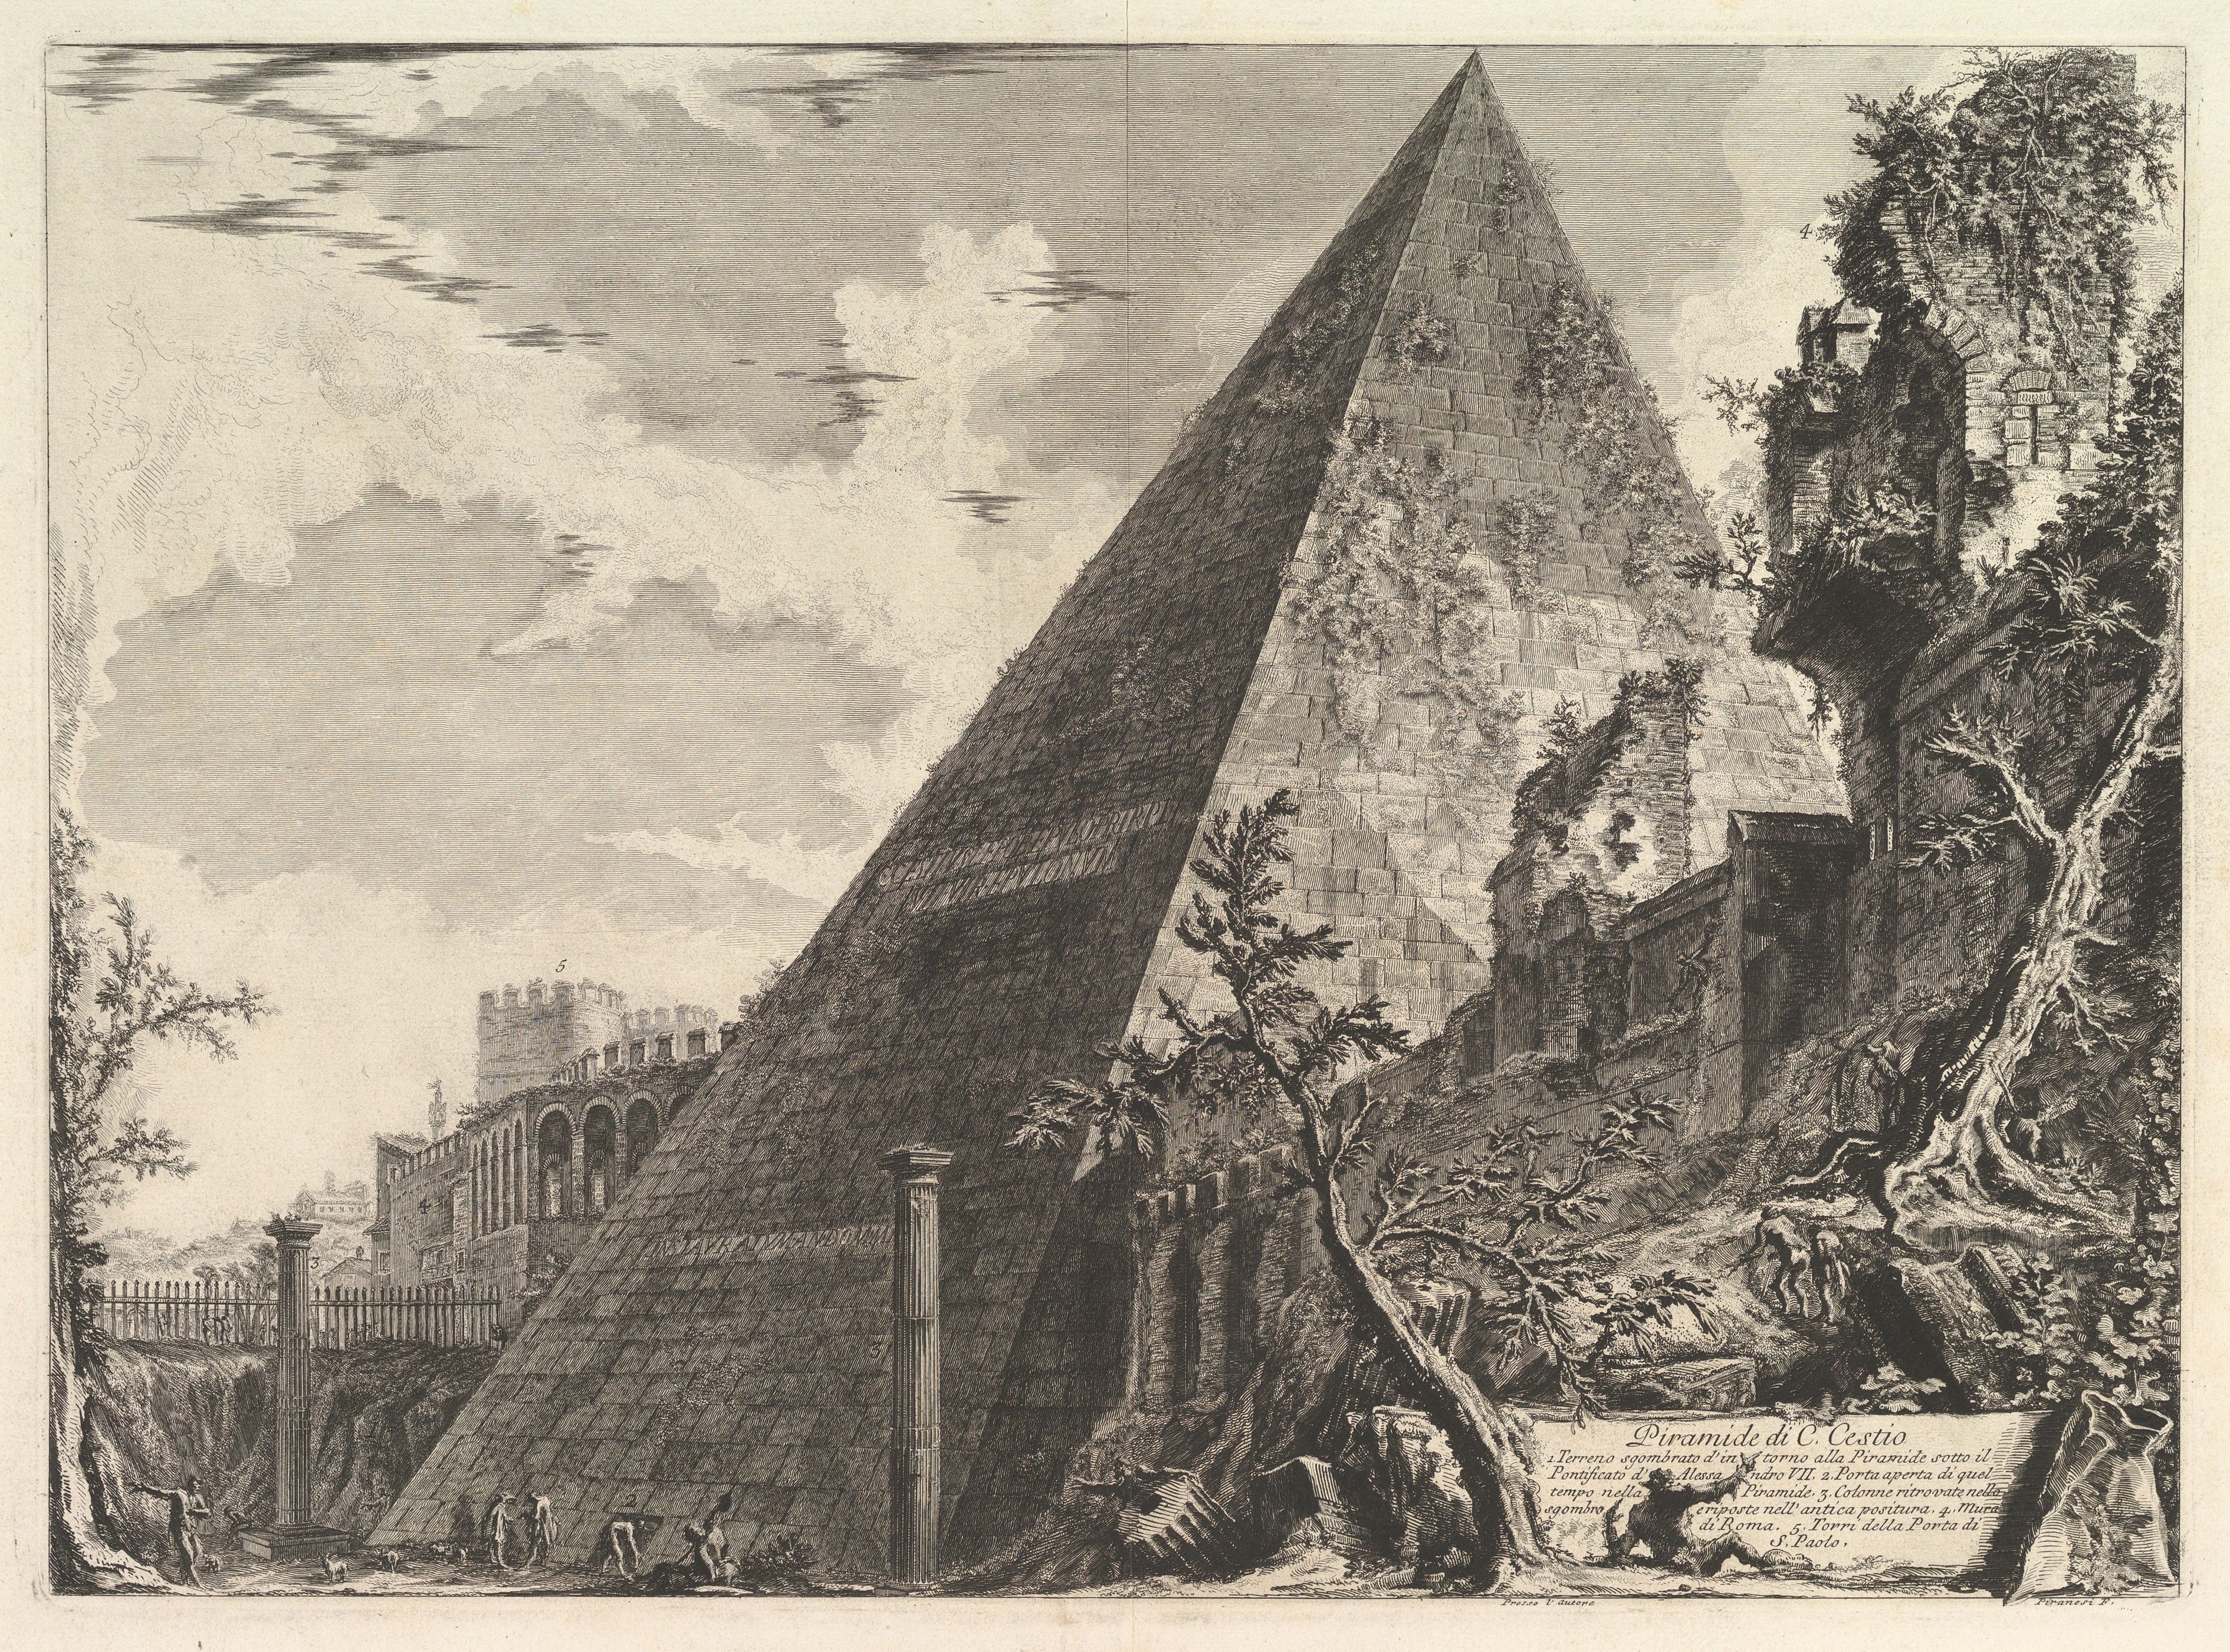 Pirâmide de Céstio by Giovanni Battista Piranesi - 1757 coleção privada